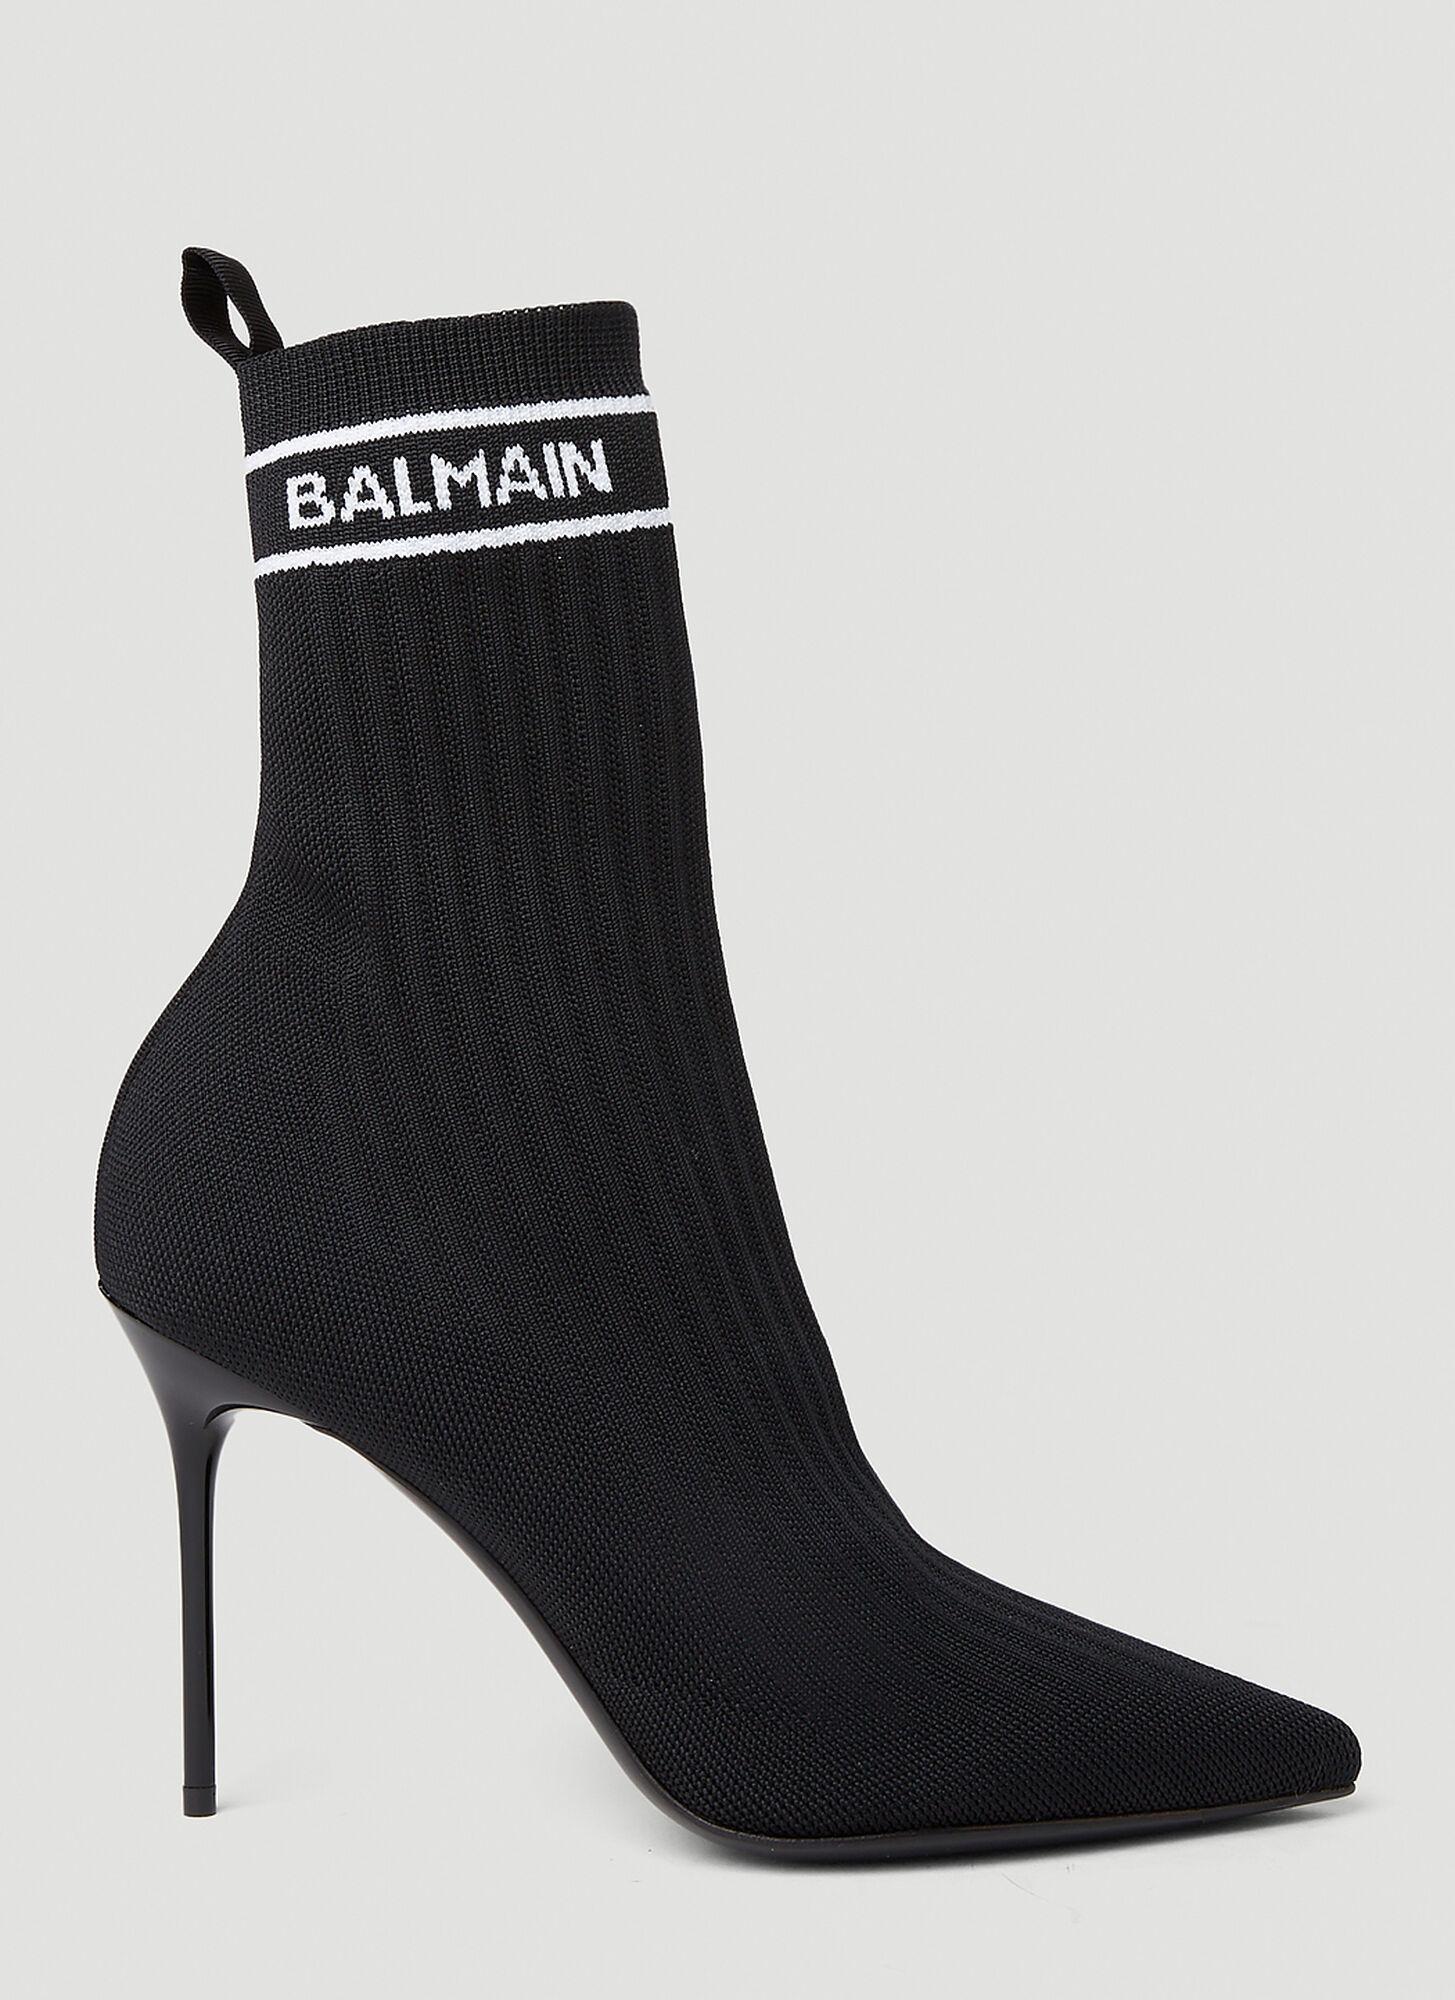 Balmain Skye Sock Boots in Black | Lyst